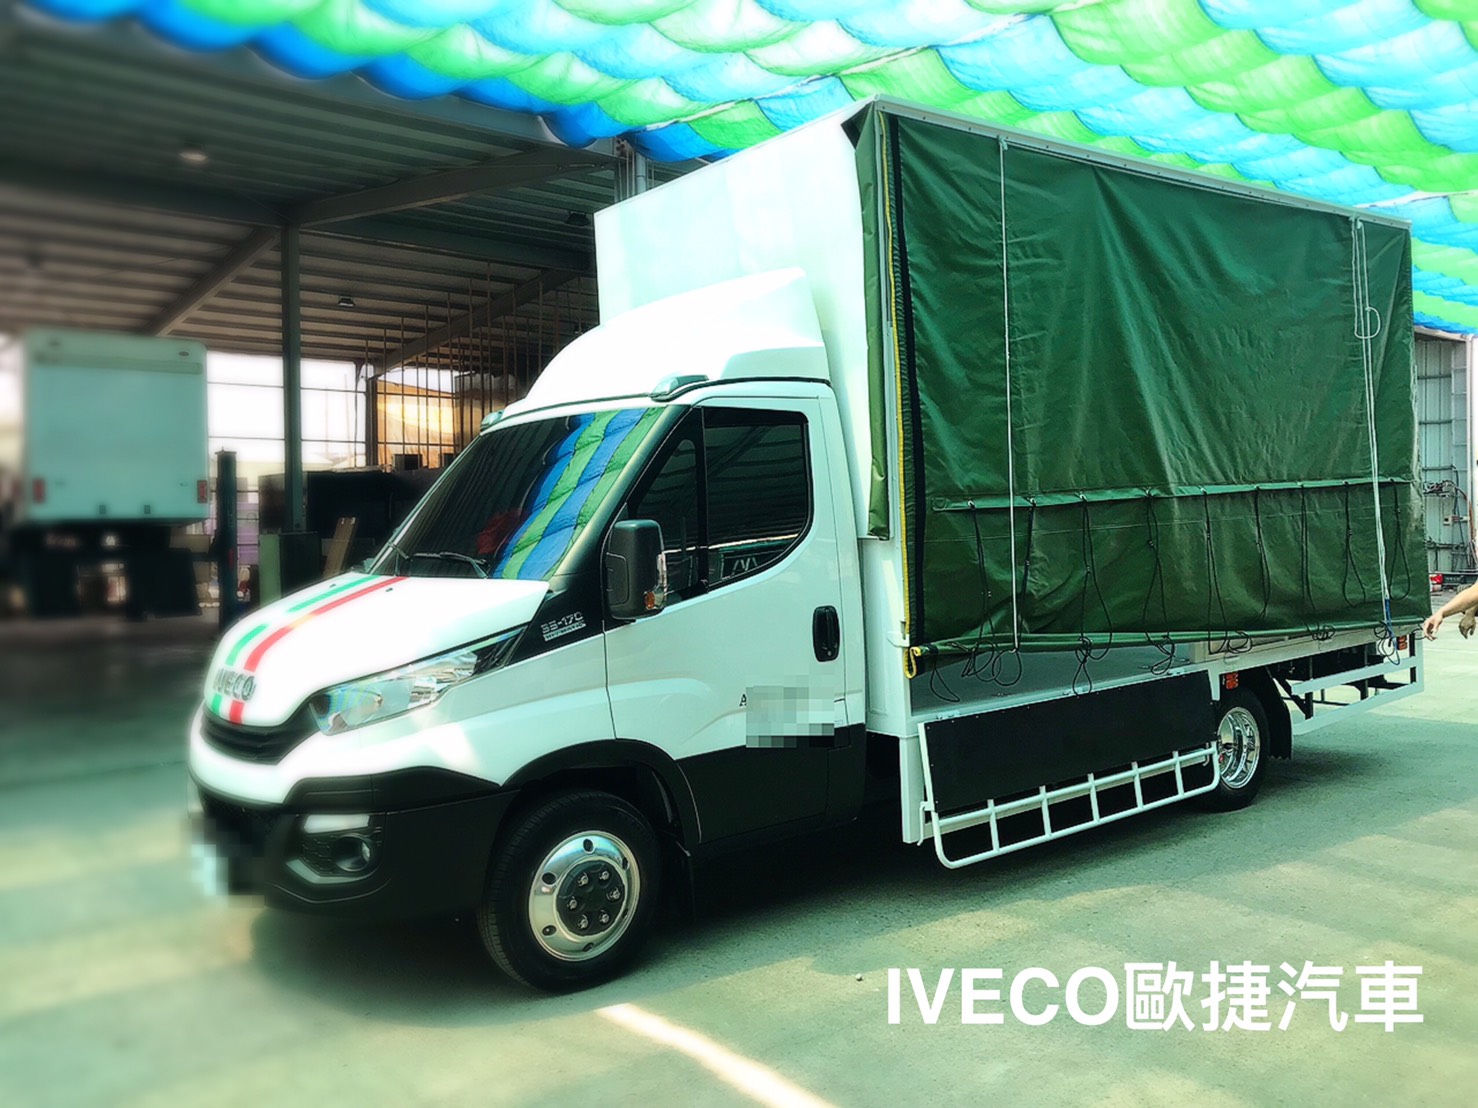 IVECO鋁製貨車車廂